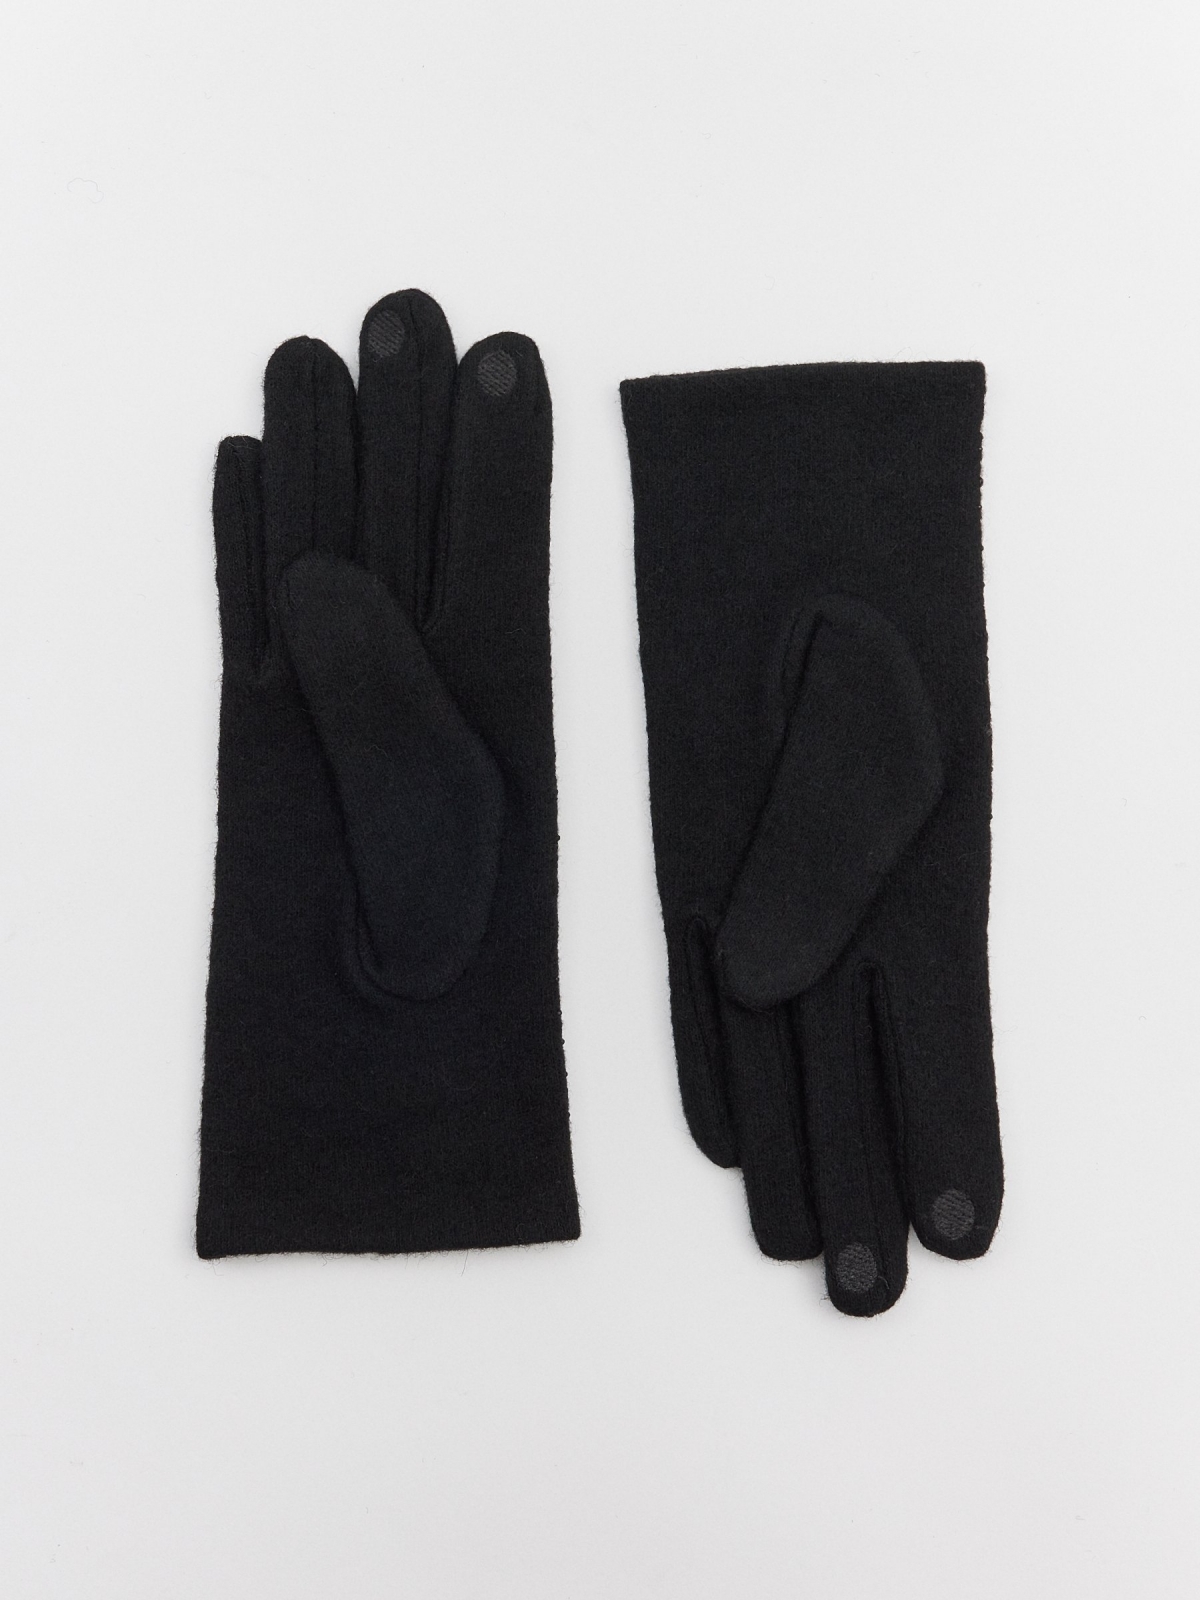 Touchscreen strass gloves black detail view